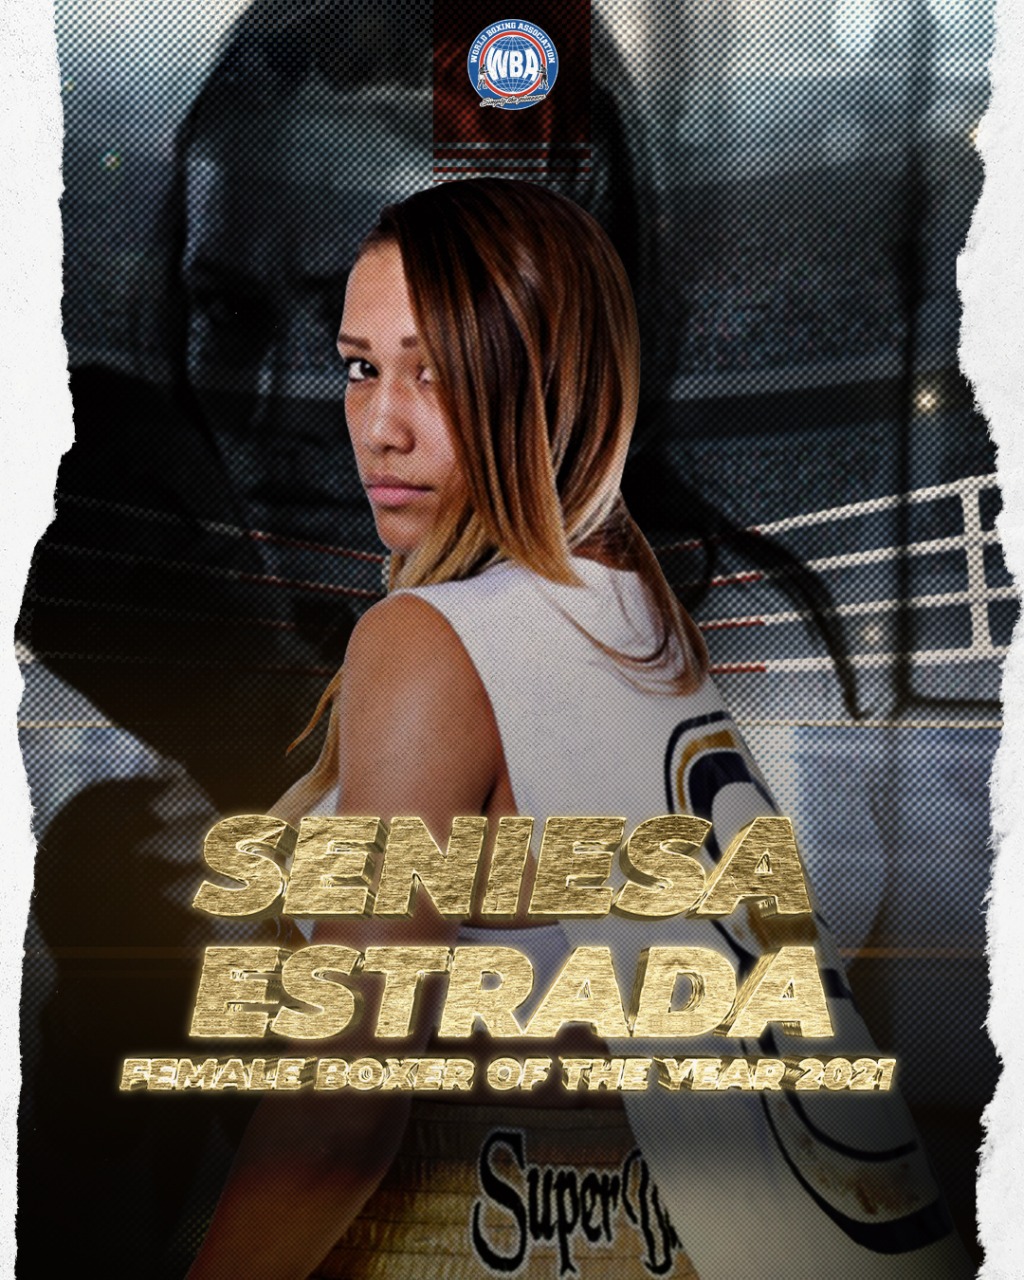 Seniesa Estrada has been warded as the WBA Boxer of the Year 2021